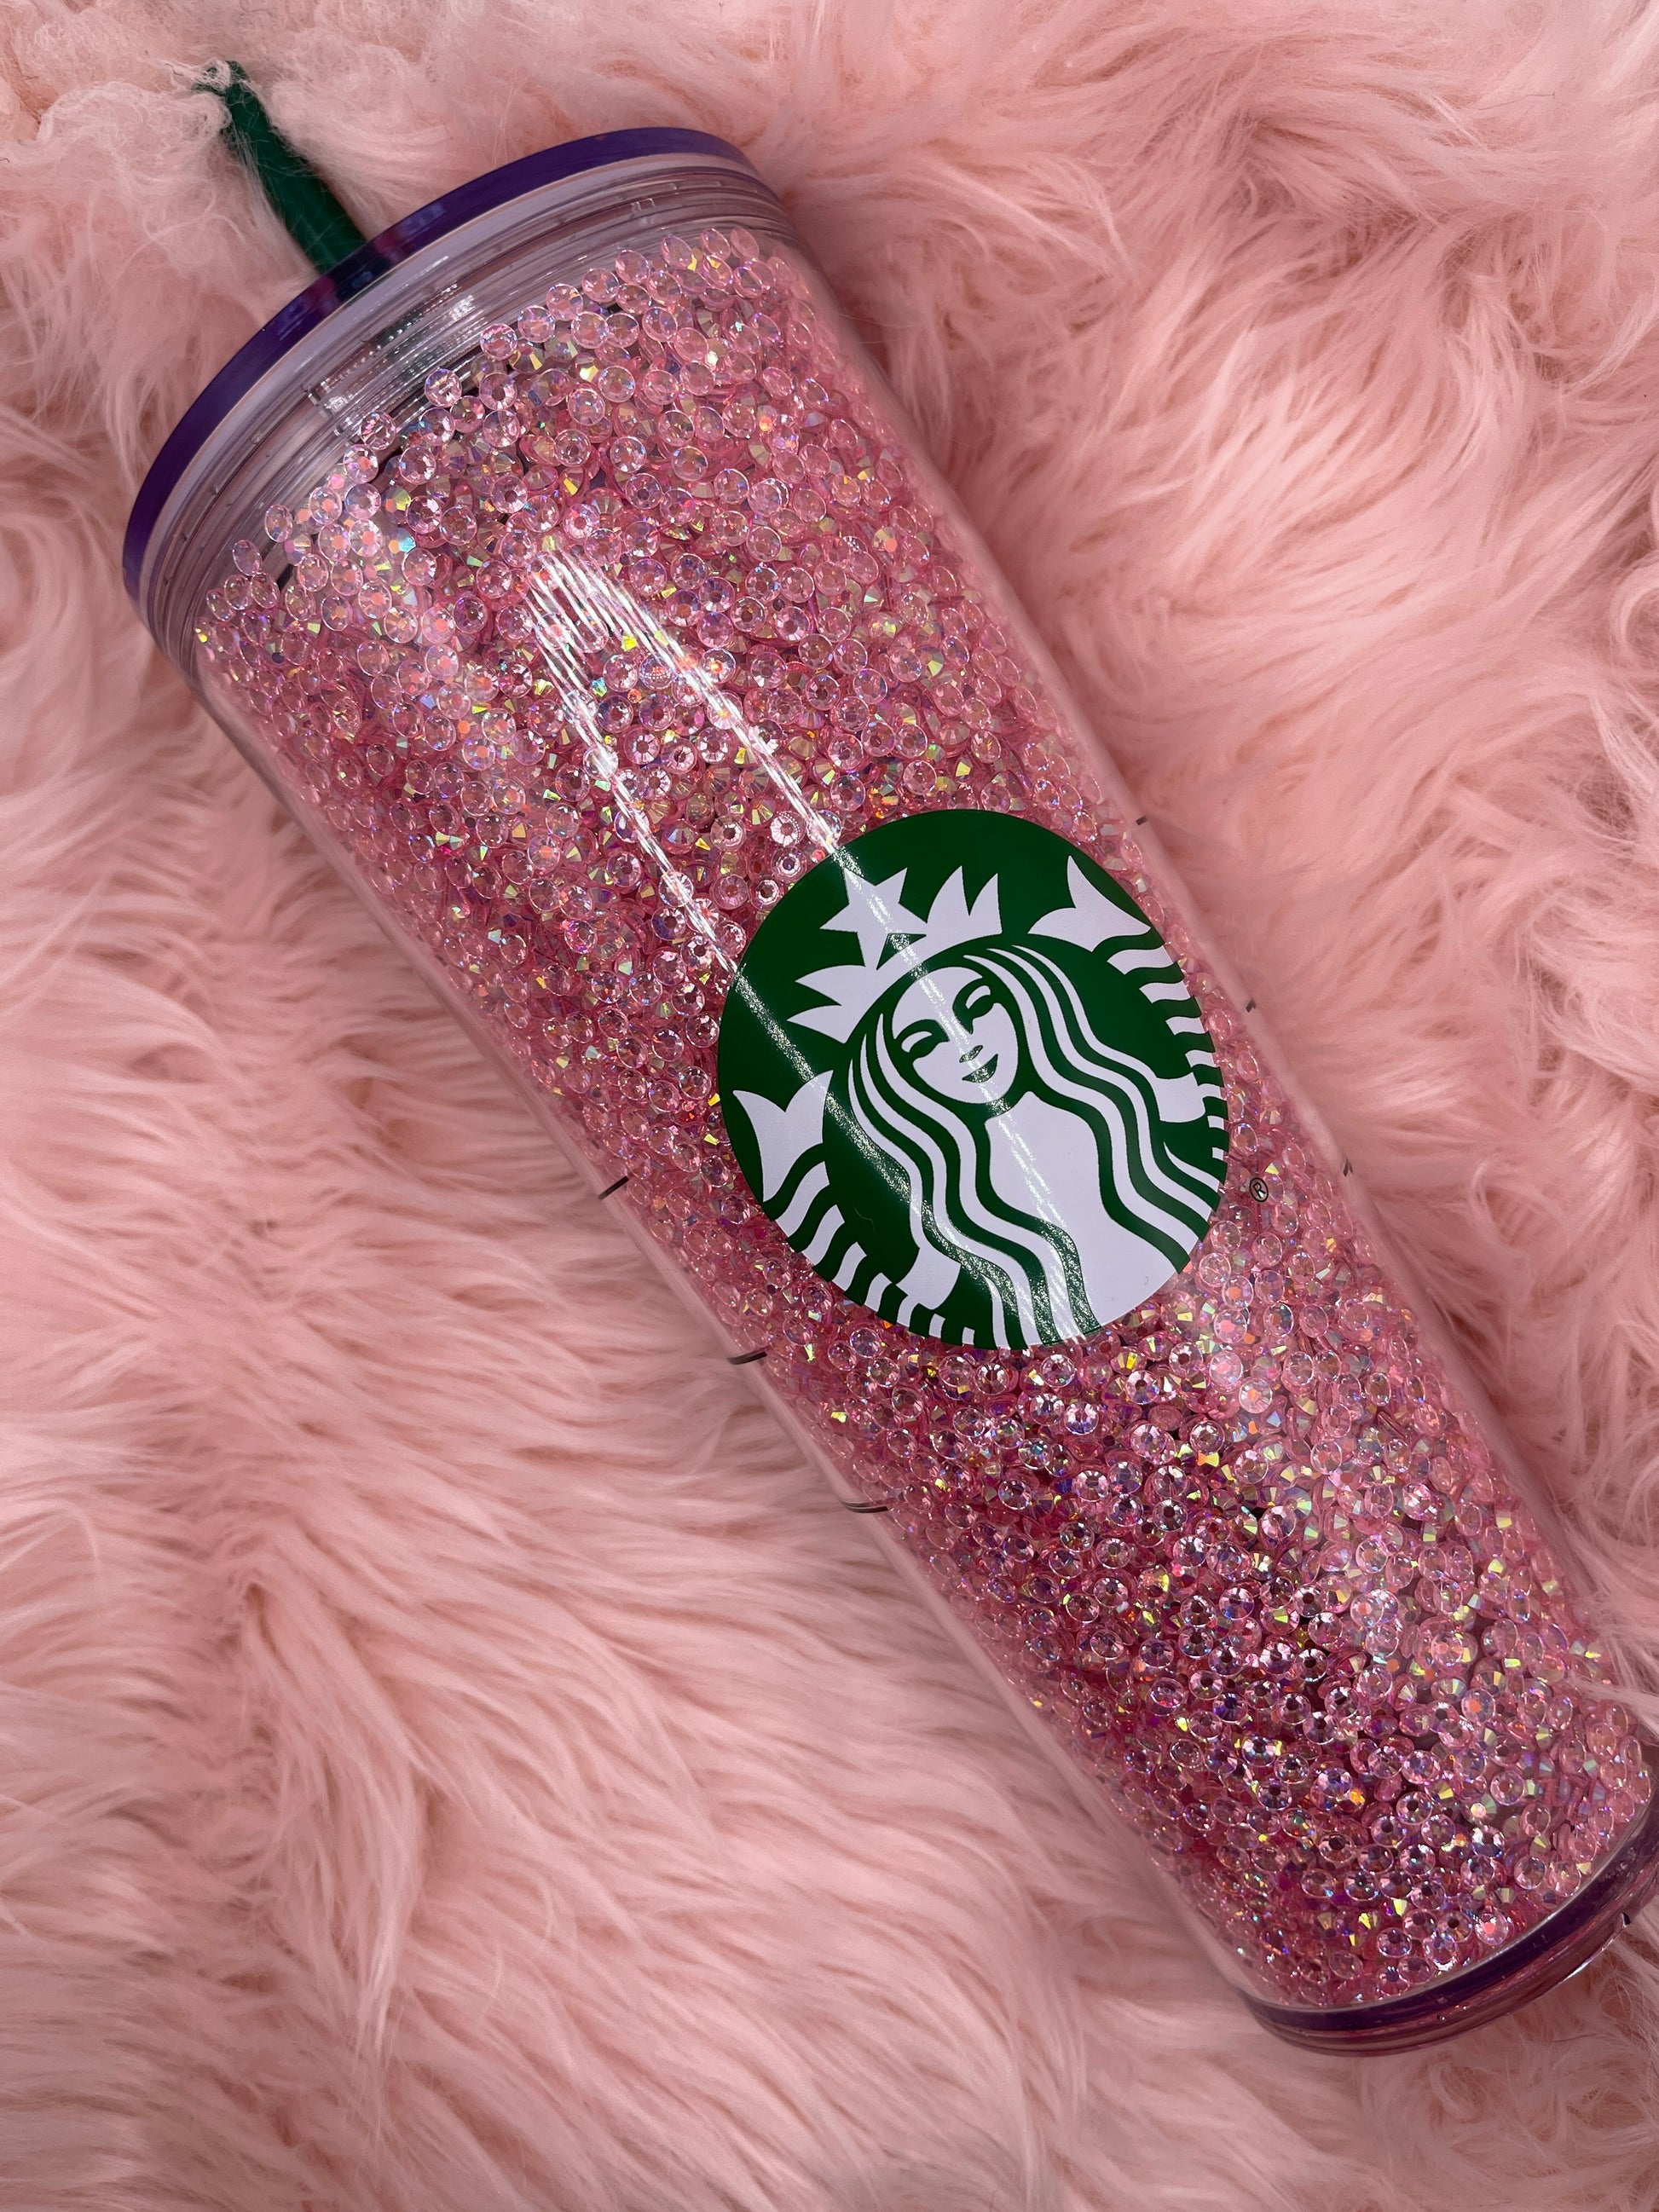 Glittered Starbucks Cup | Reusable Starbucks cold cup | Starbucks Venti  Cold Cup | Glittered Tumbler | Personalized Cup | Hocus Pocus 